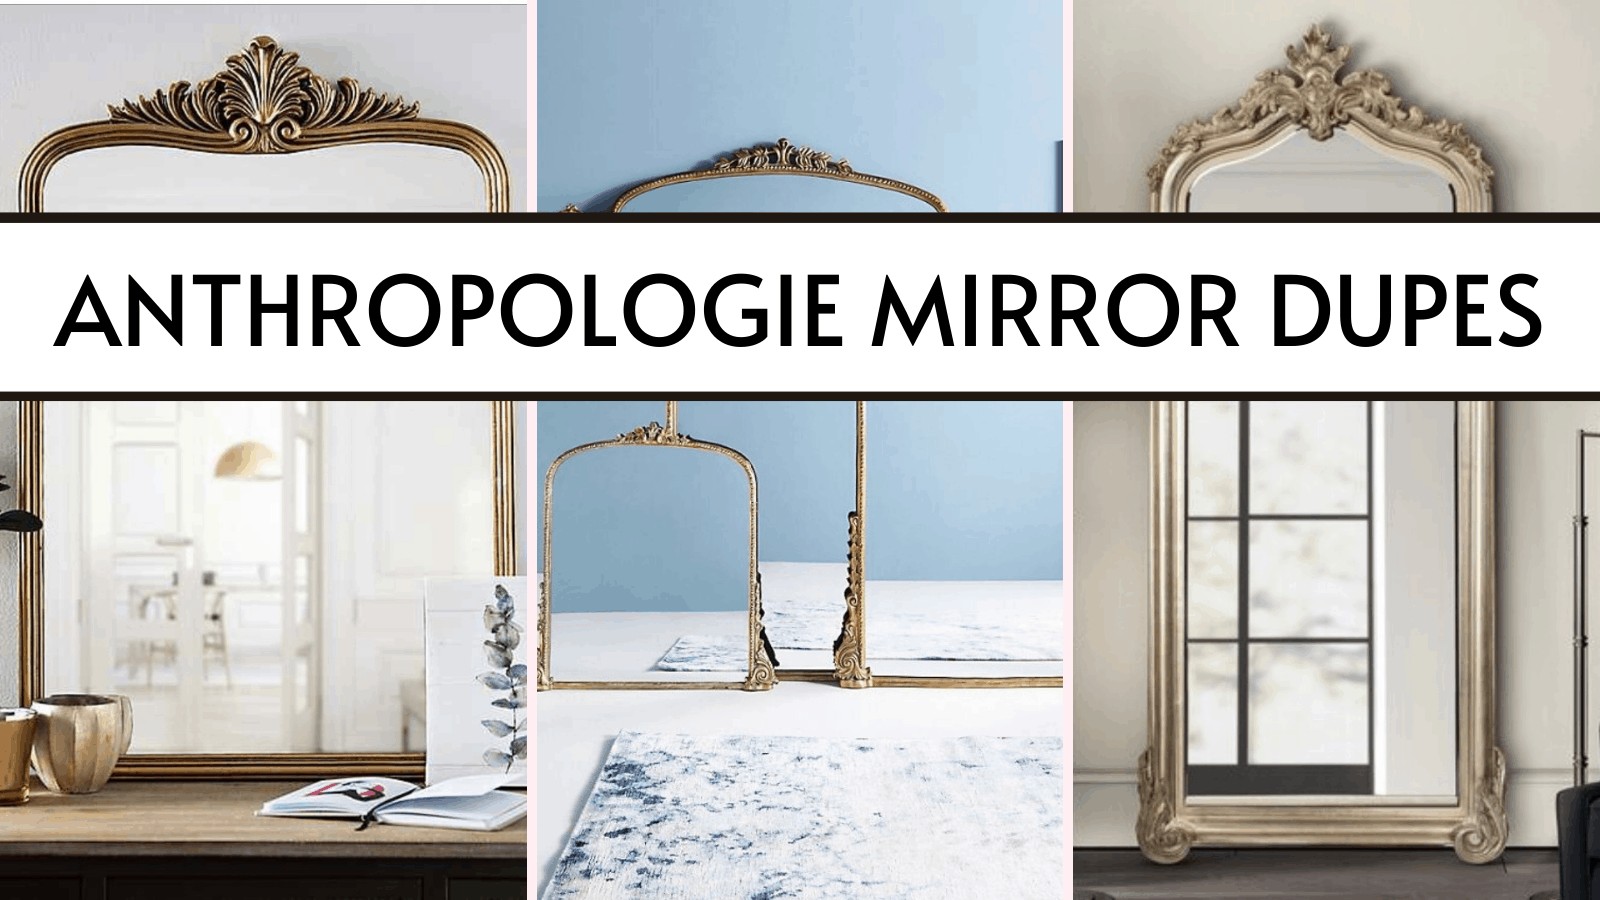 Anthropologie mirror dupes